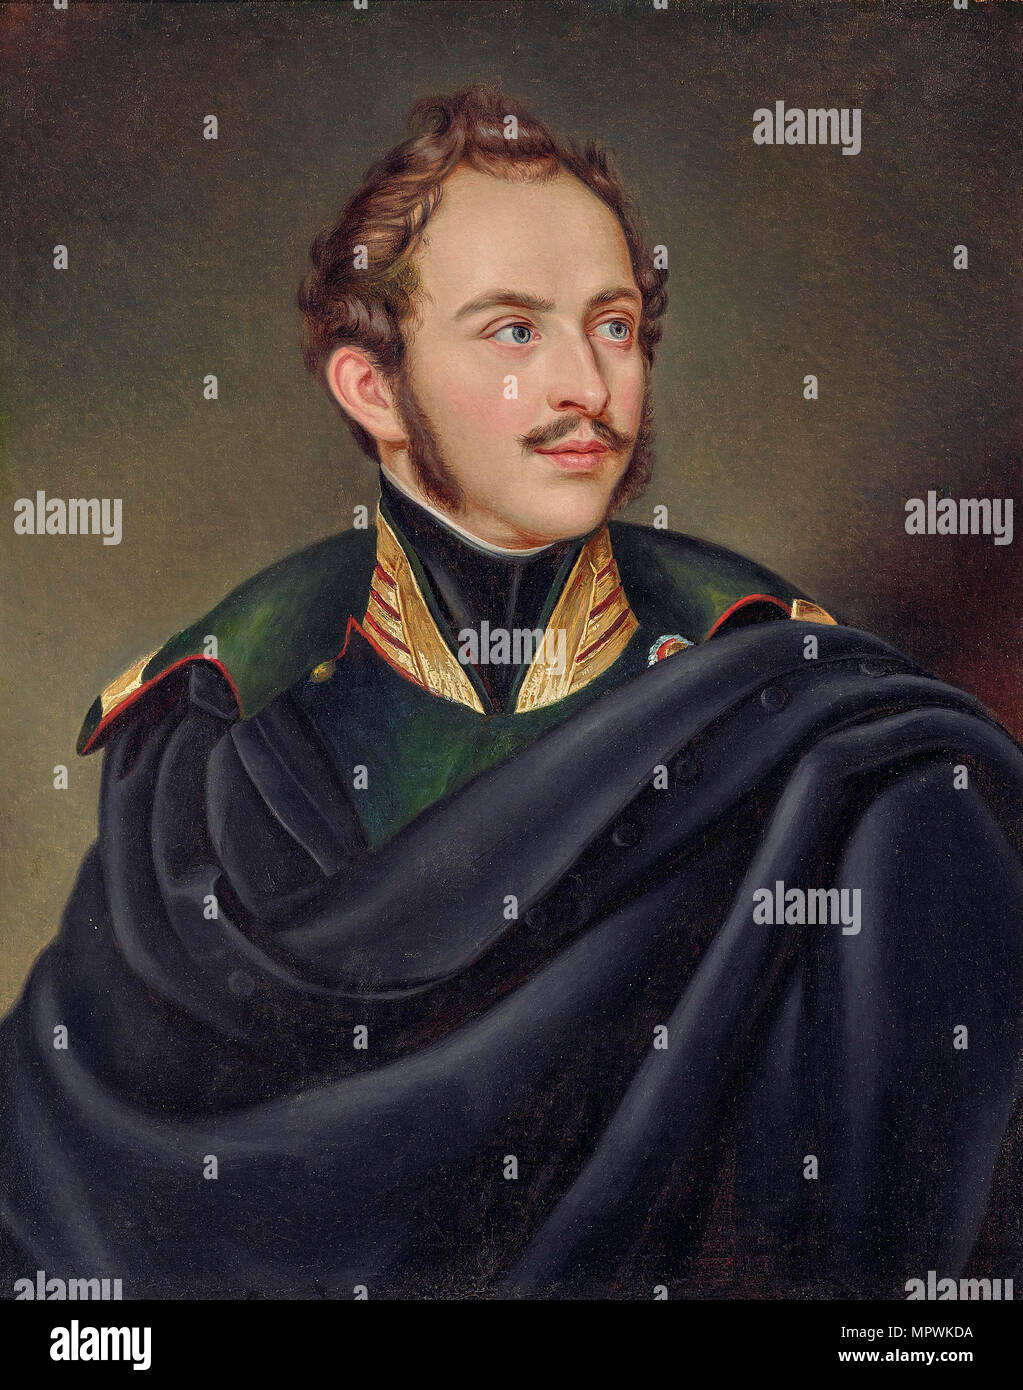 Portrait of Maximilian II (1811-1864), King of Bavaria. Stock Photo